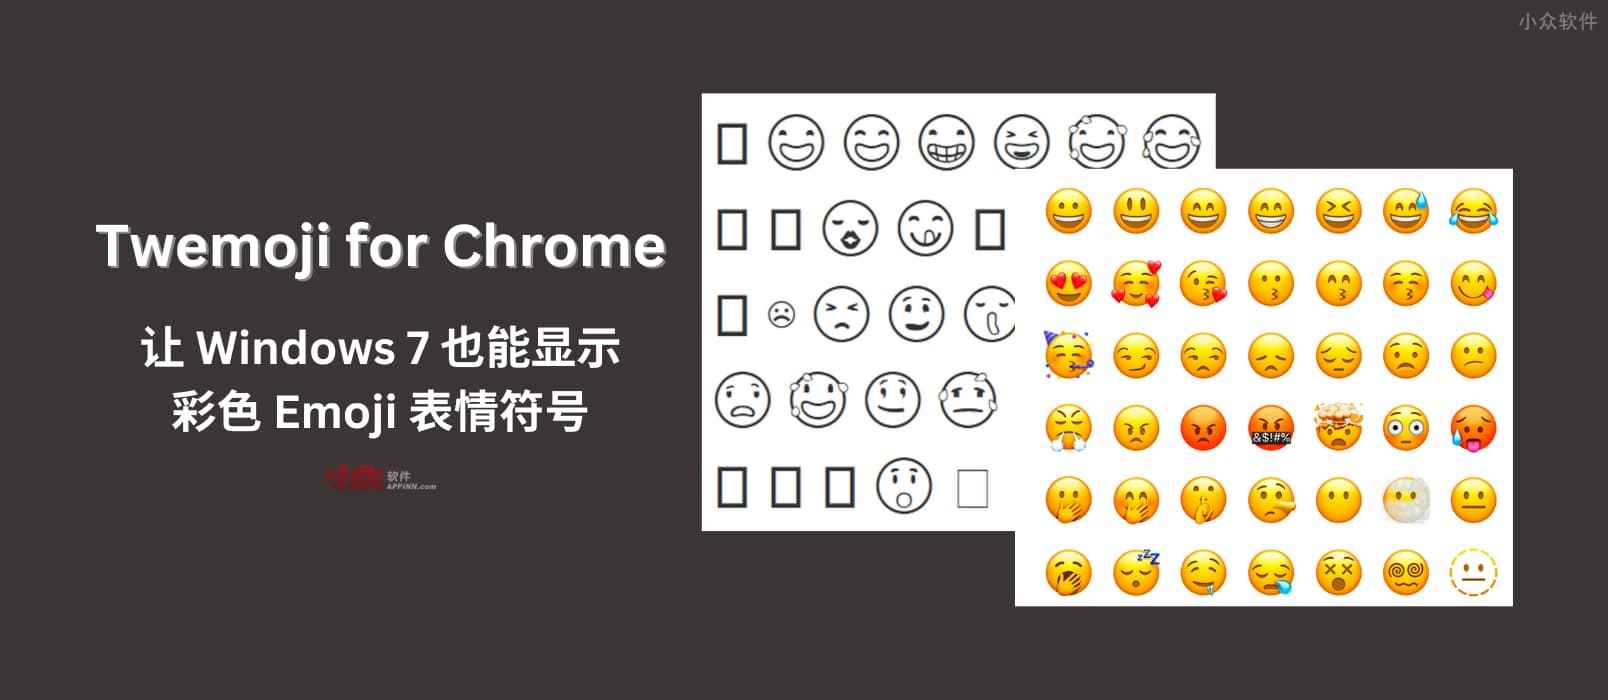 Twemoji for Chrome – 让 Windows 7 显示彩色 Emoji 表情符号